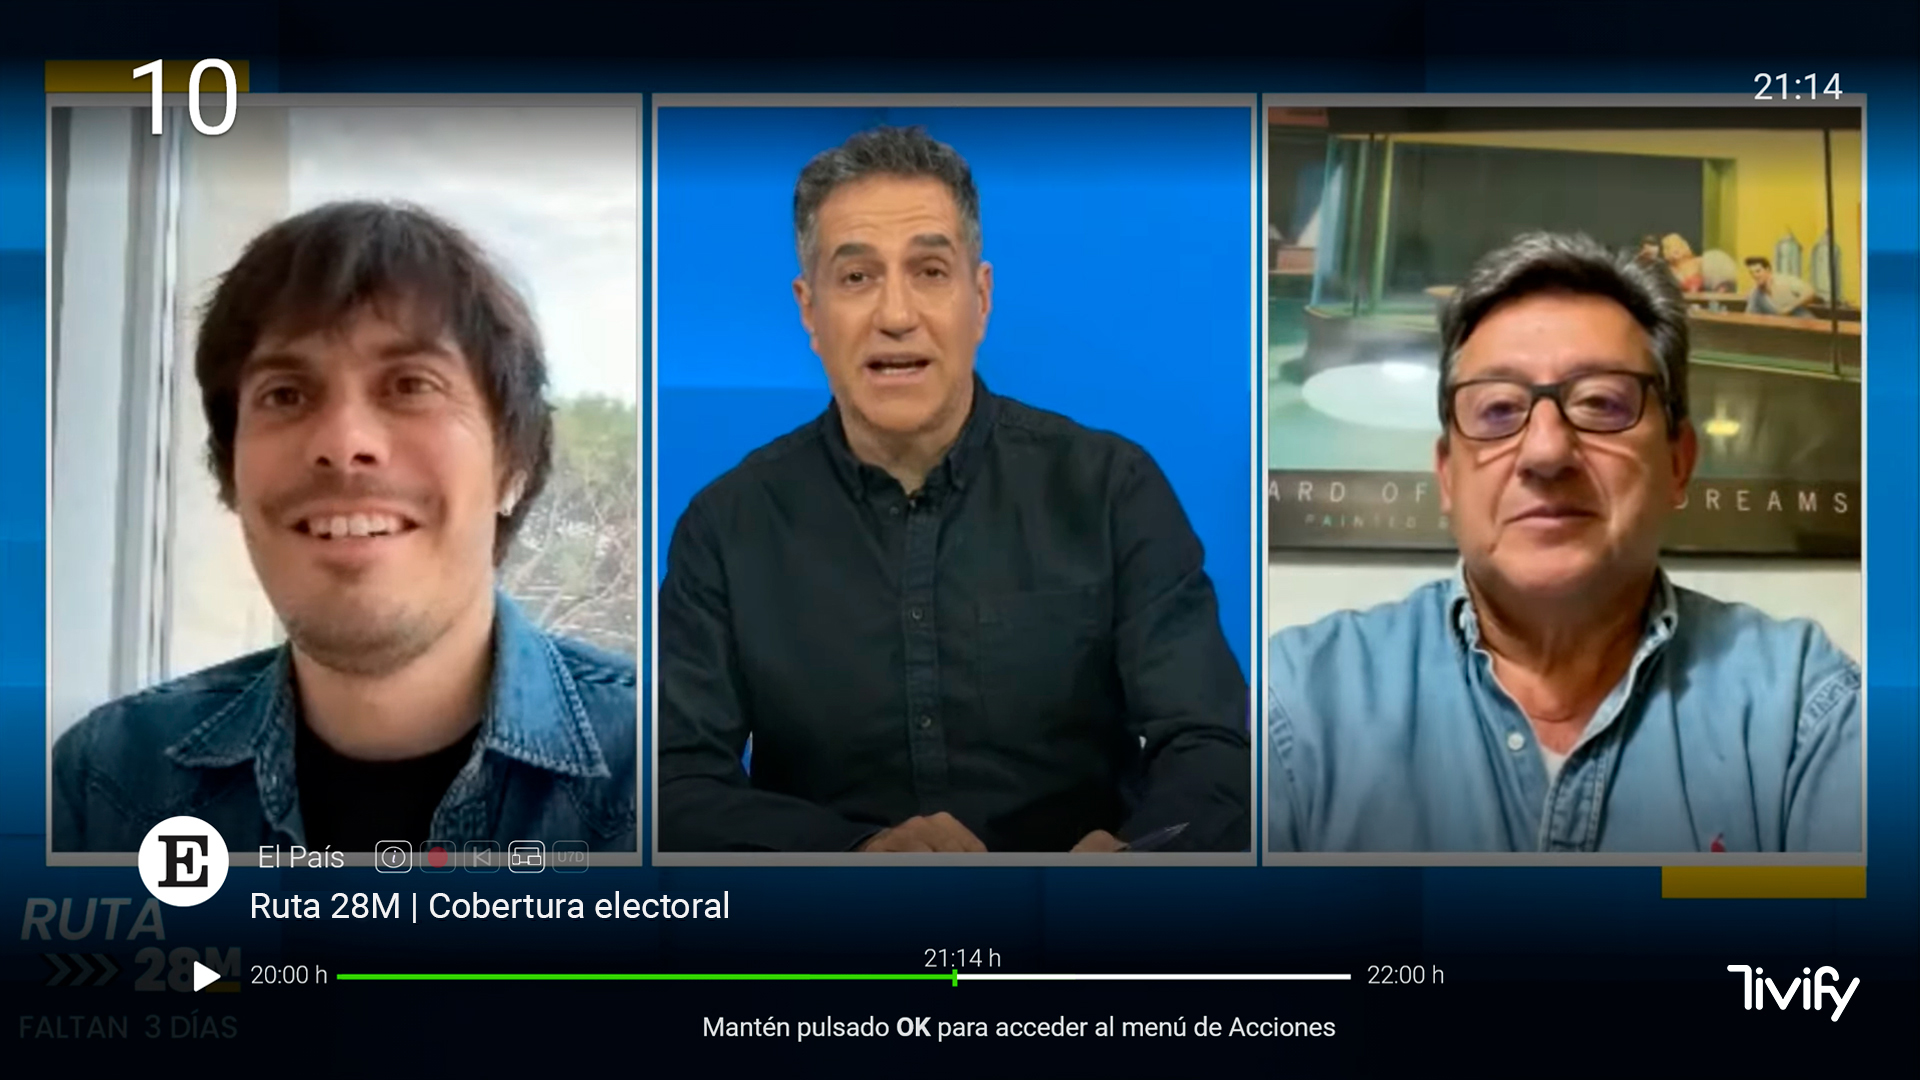 El Pais-Tivify screen capture